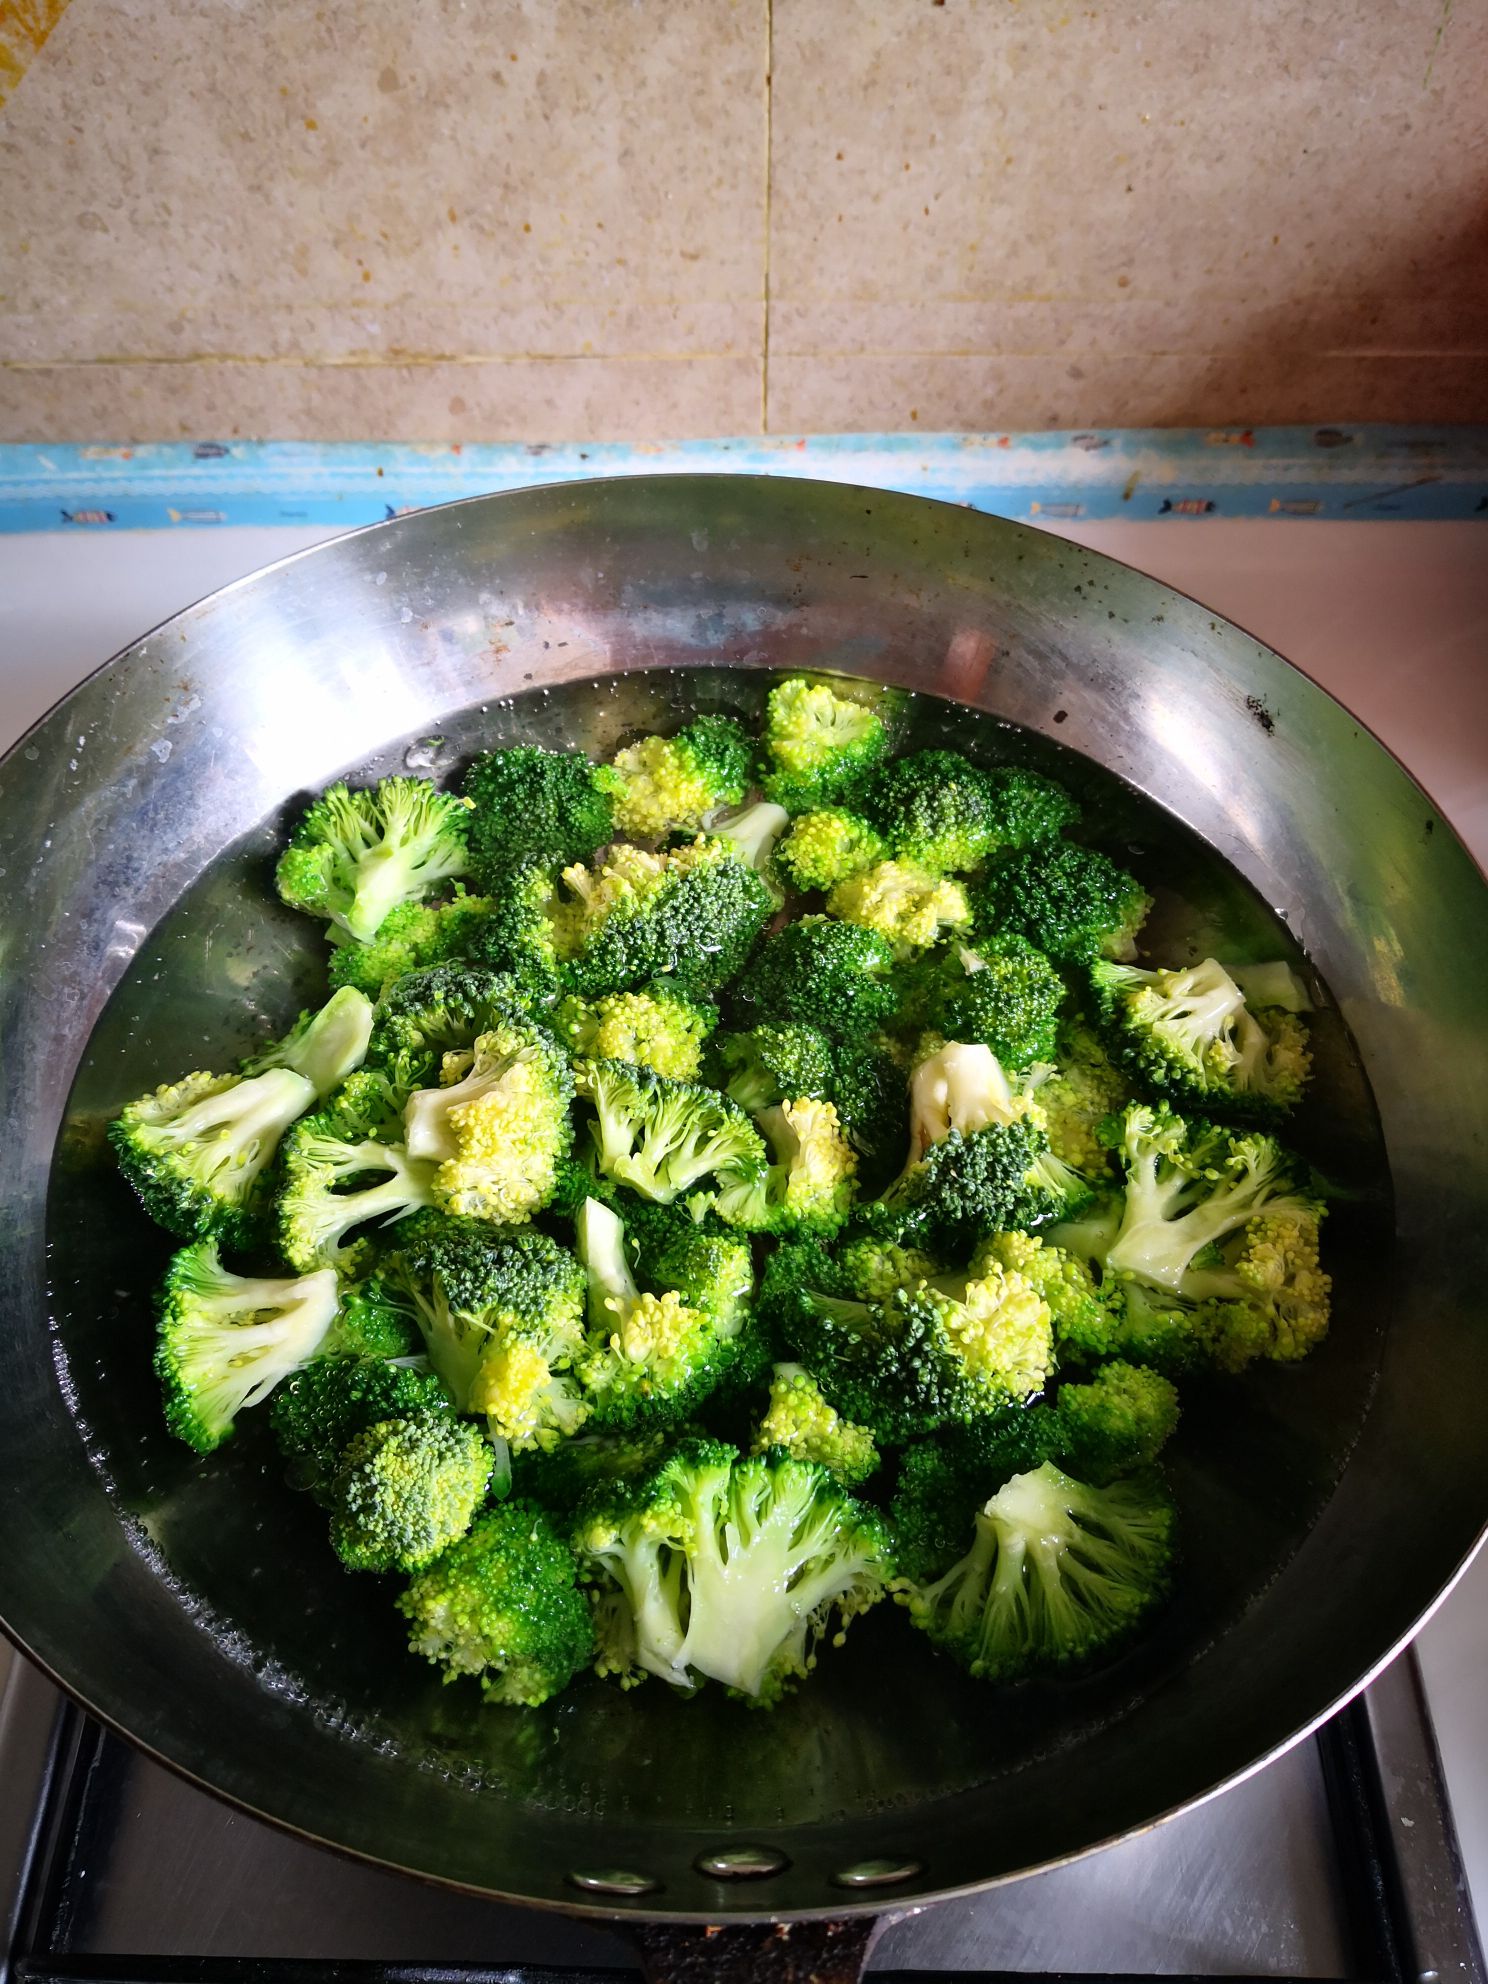 Stir-fried Broccoli with Sliced Pork recipe